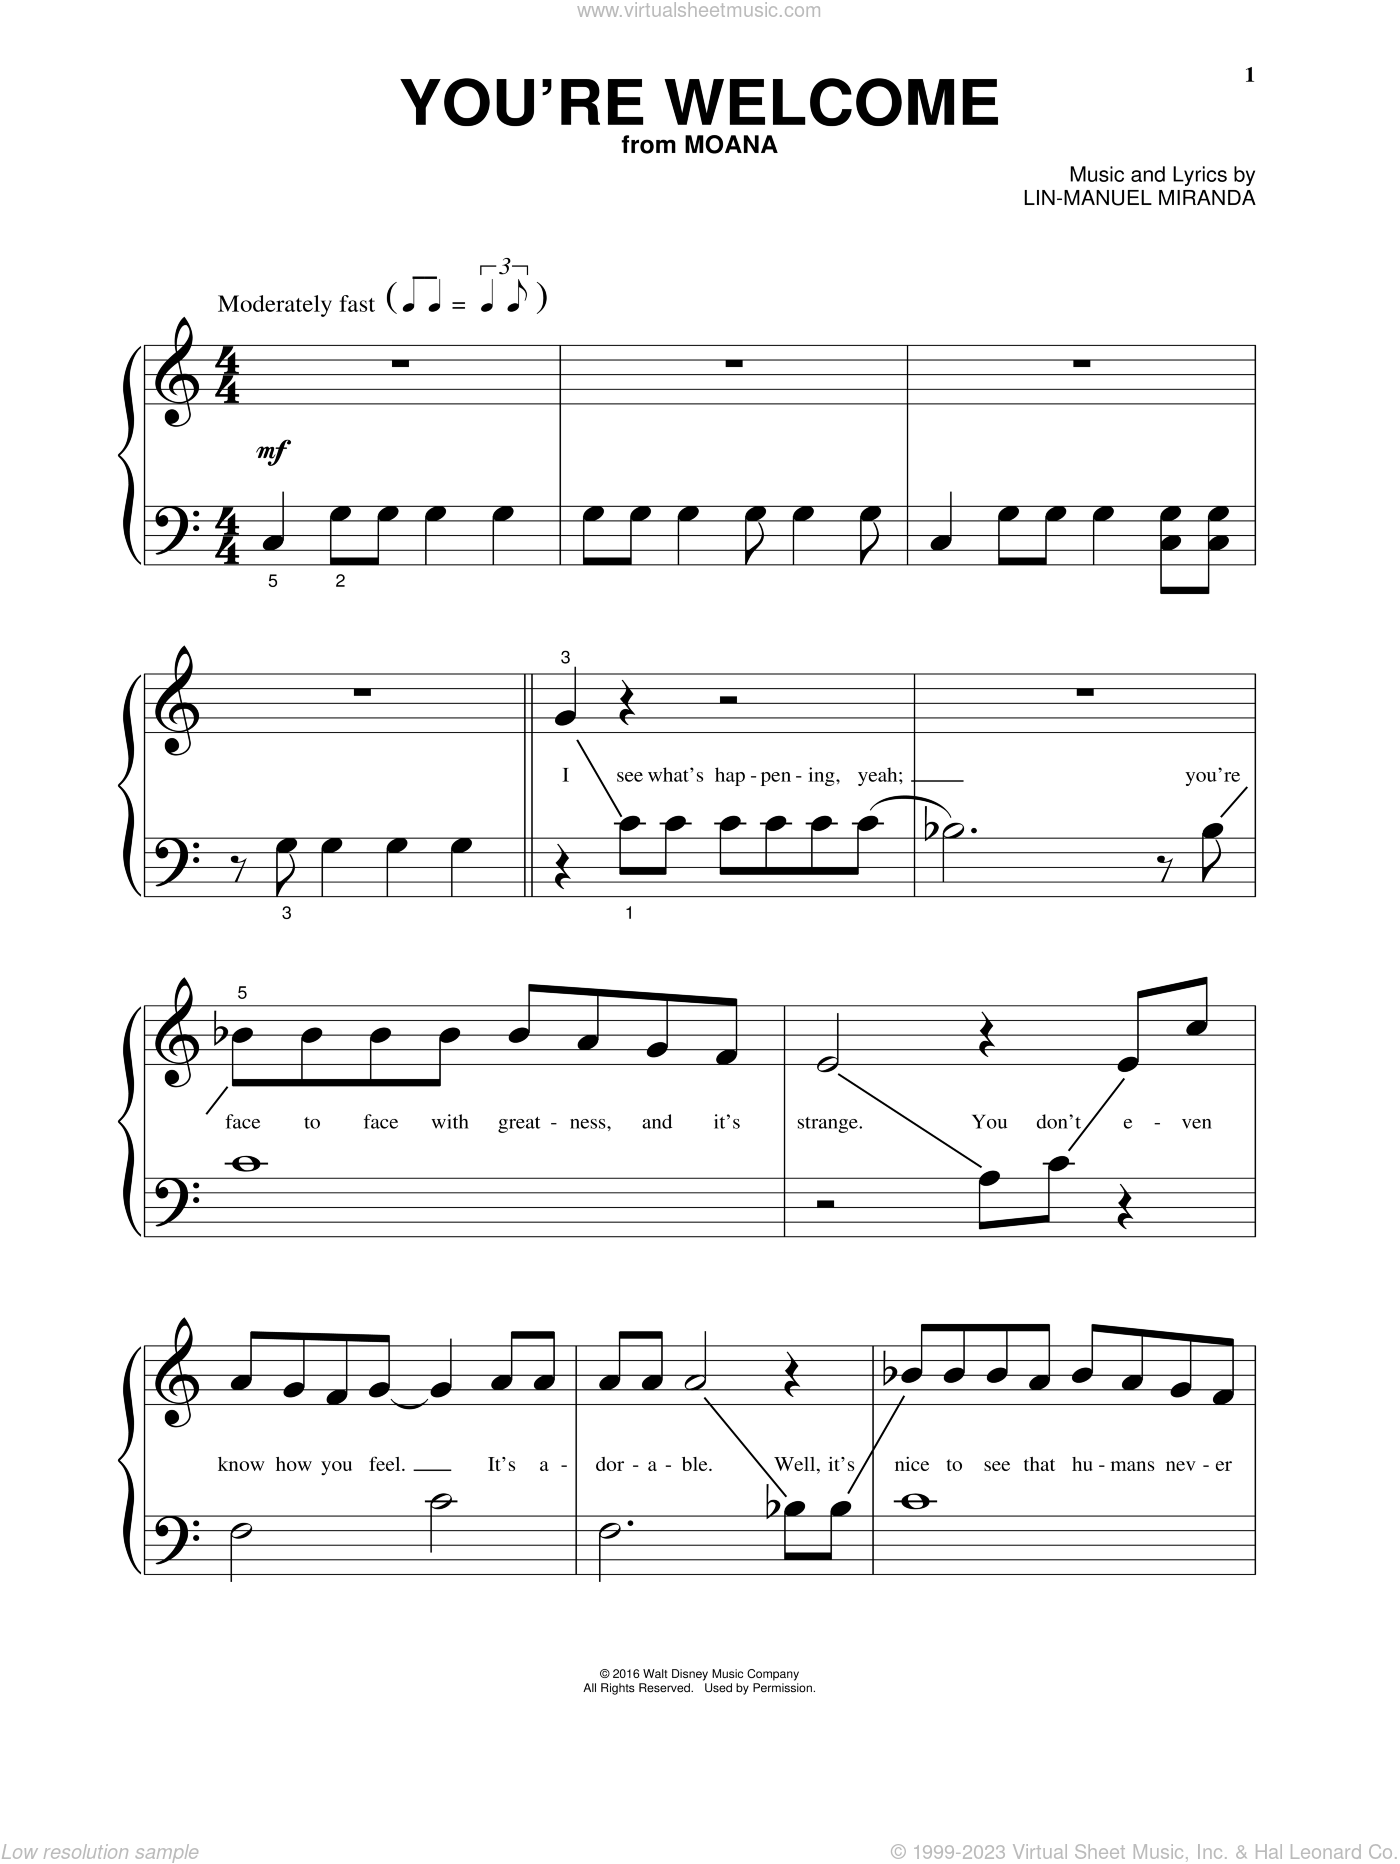 miranda-you-re-welcome-from-moana-sheet-music-for-piano-solo-big-note-book